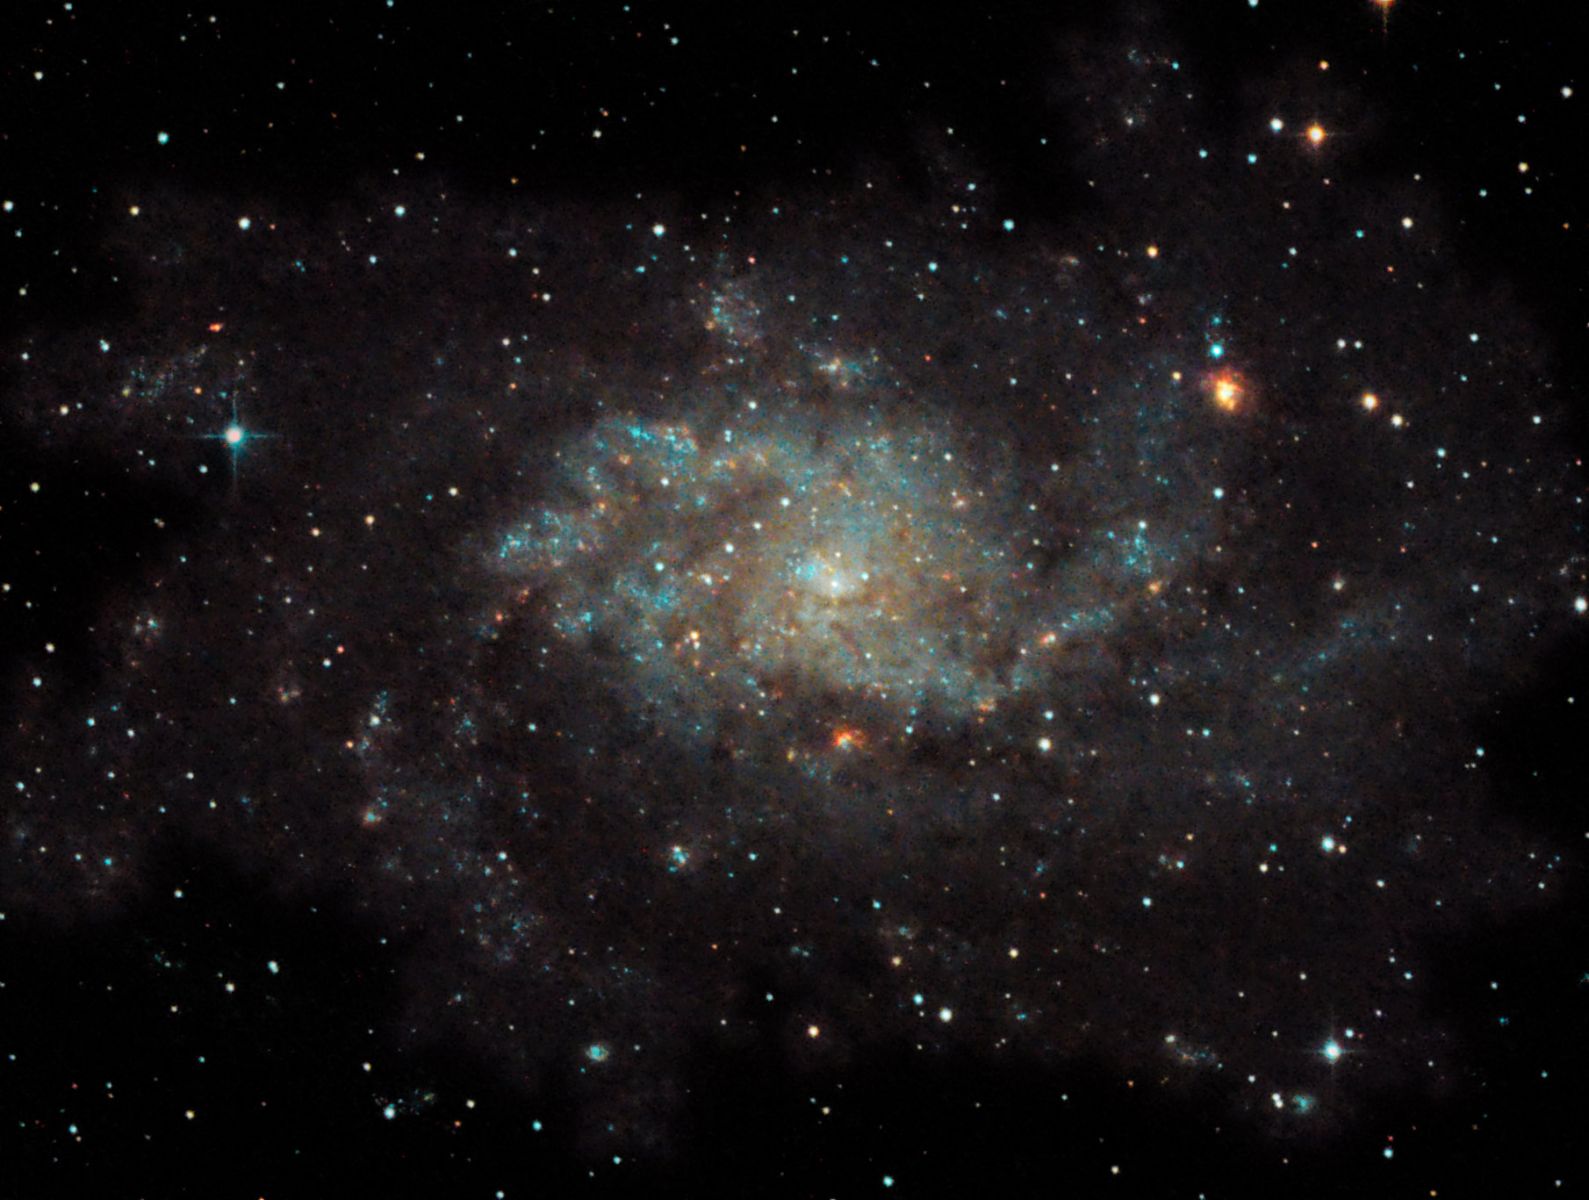 M33 - the Triangulum galaxy